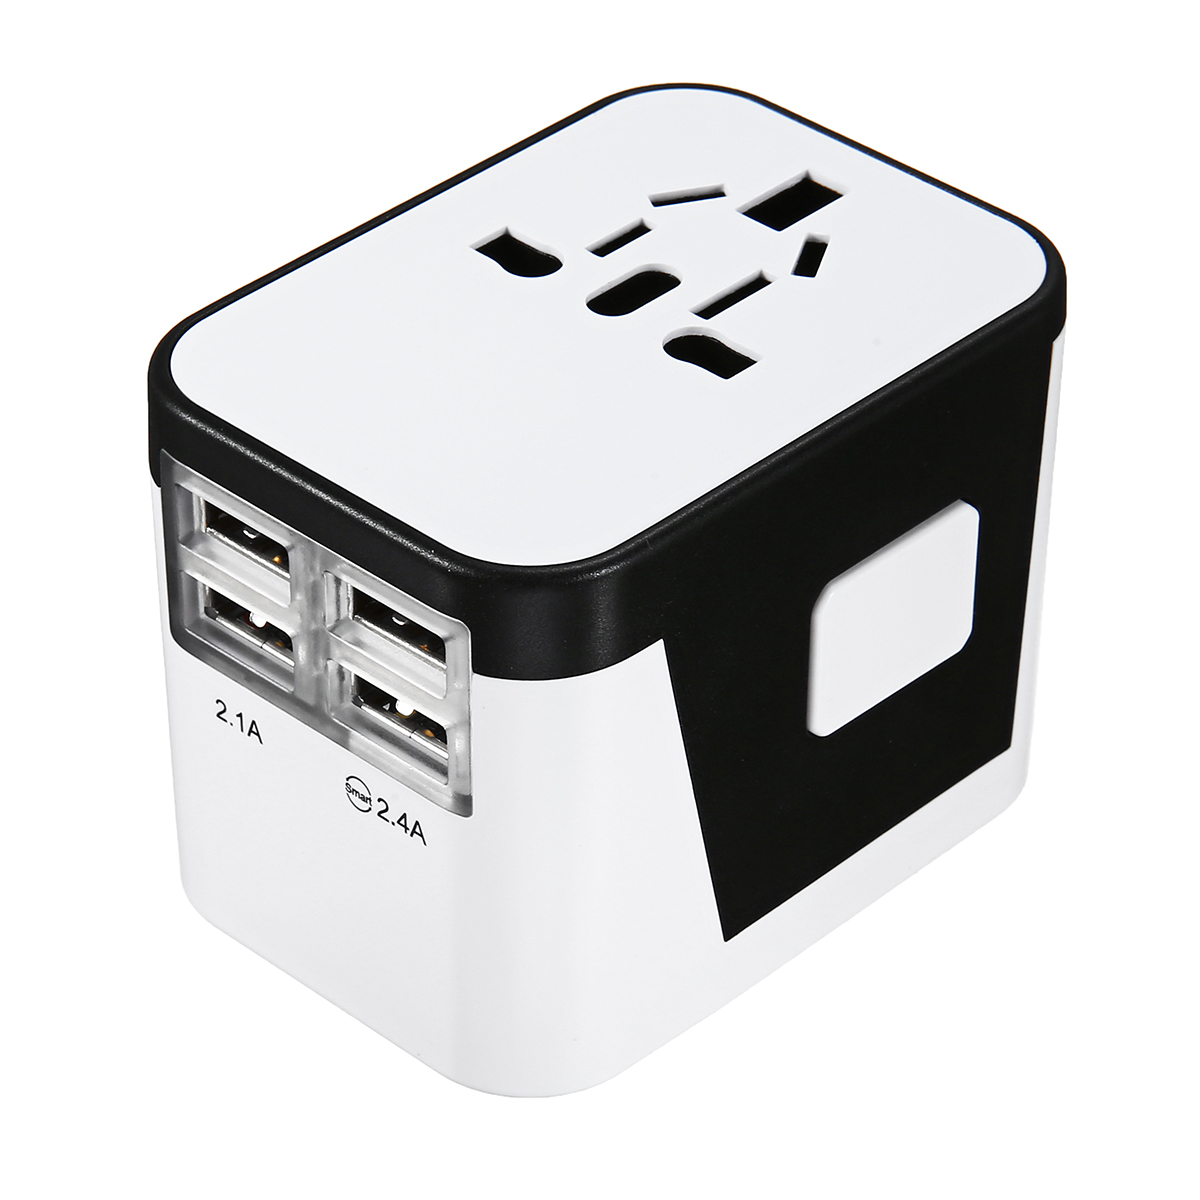 

AUGIENB Global Universal Conversion Plug Разъем 4 USB-адаптер для путешествий